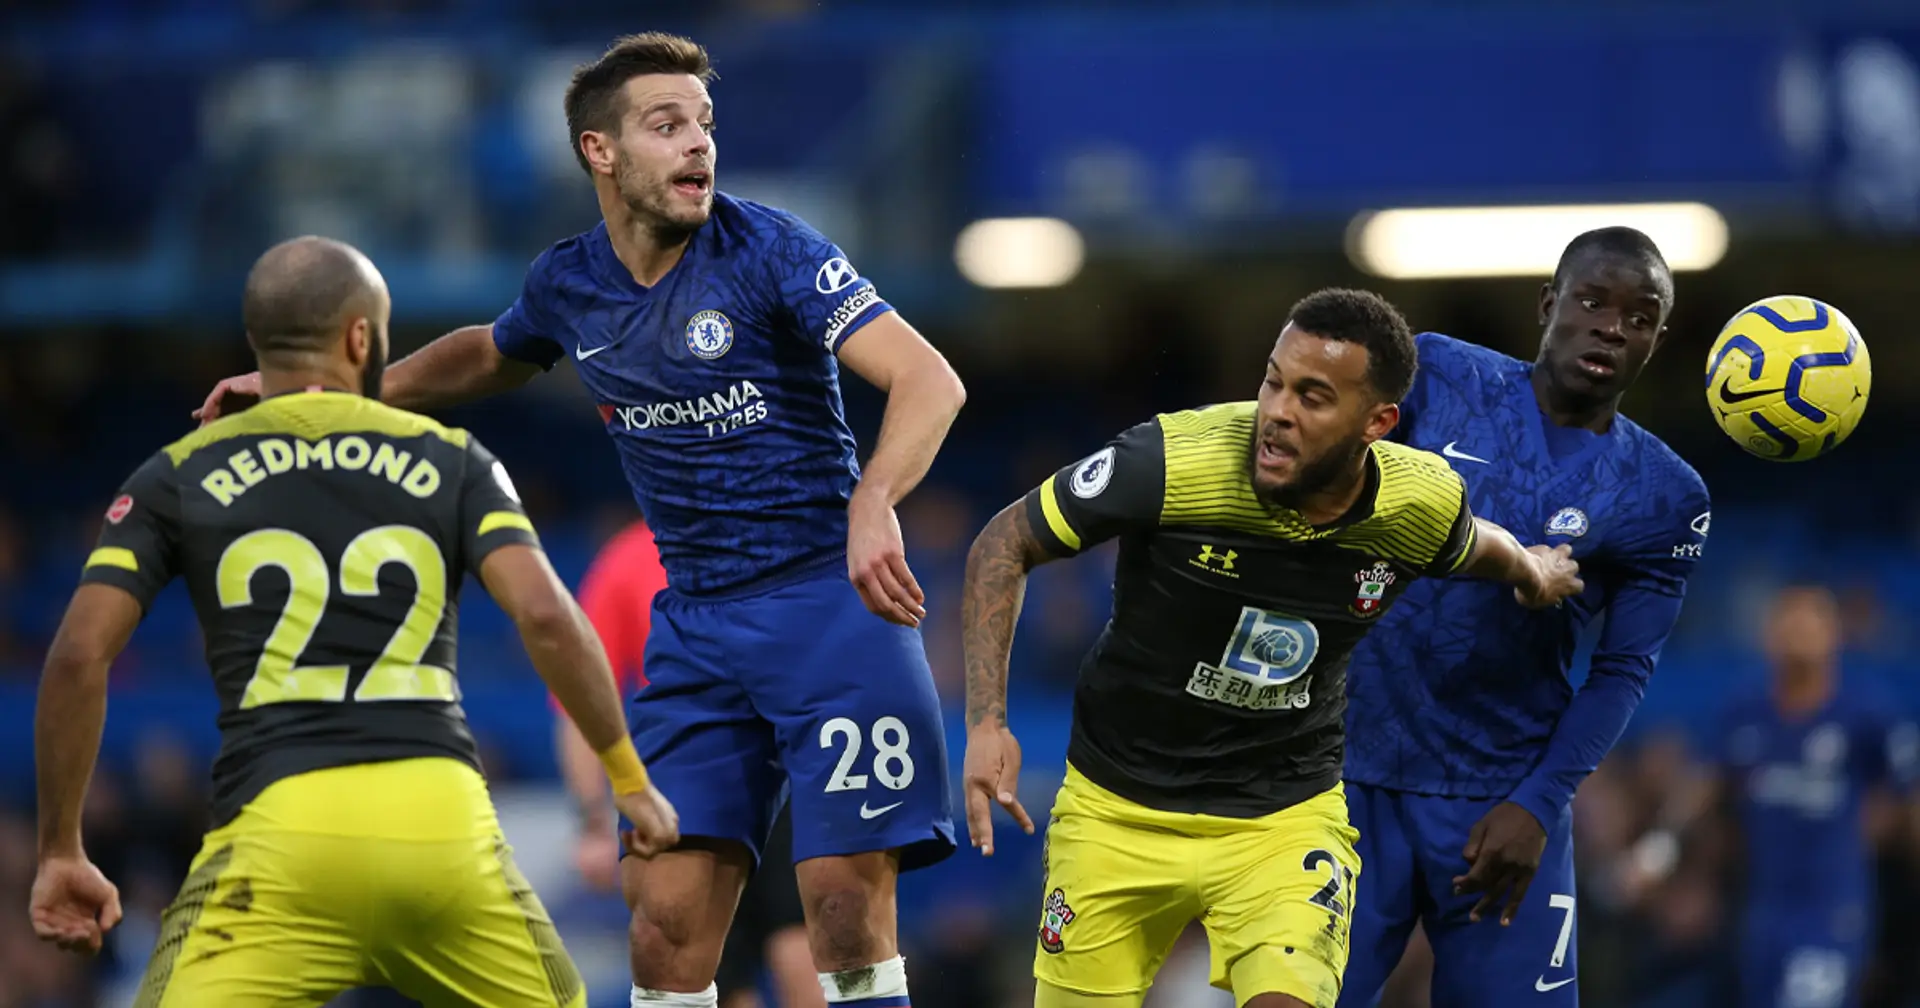 Chelsea vs Southampton: line-ups, score predictions, key stats & more - preview